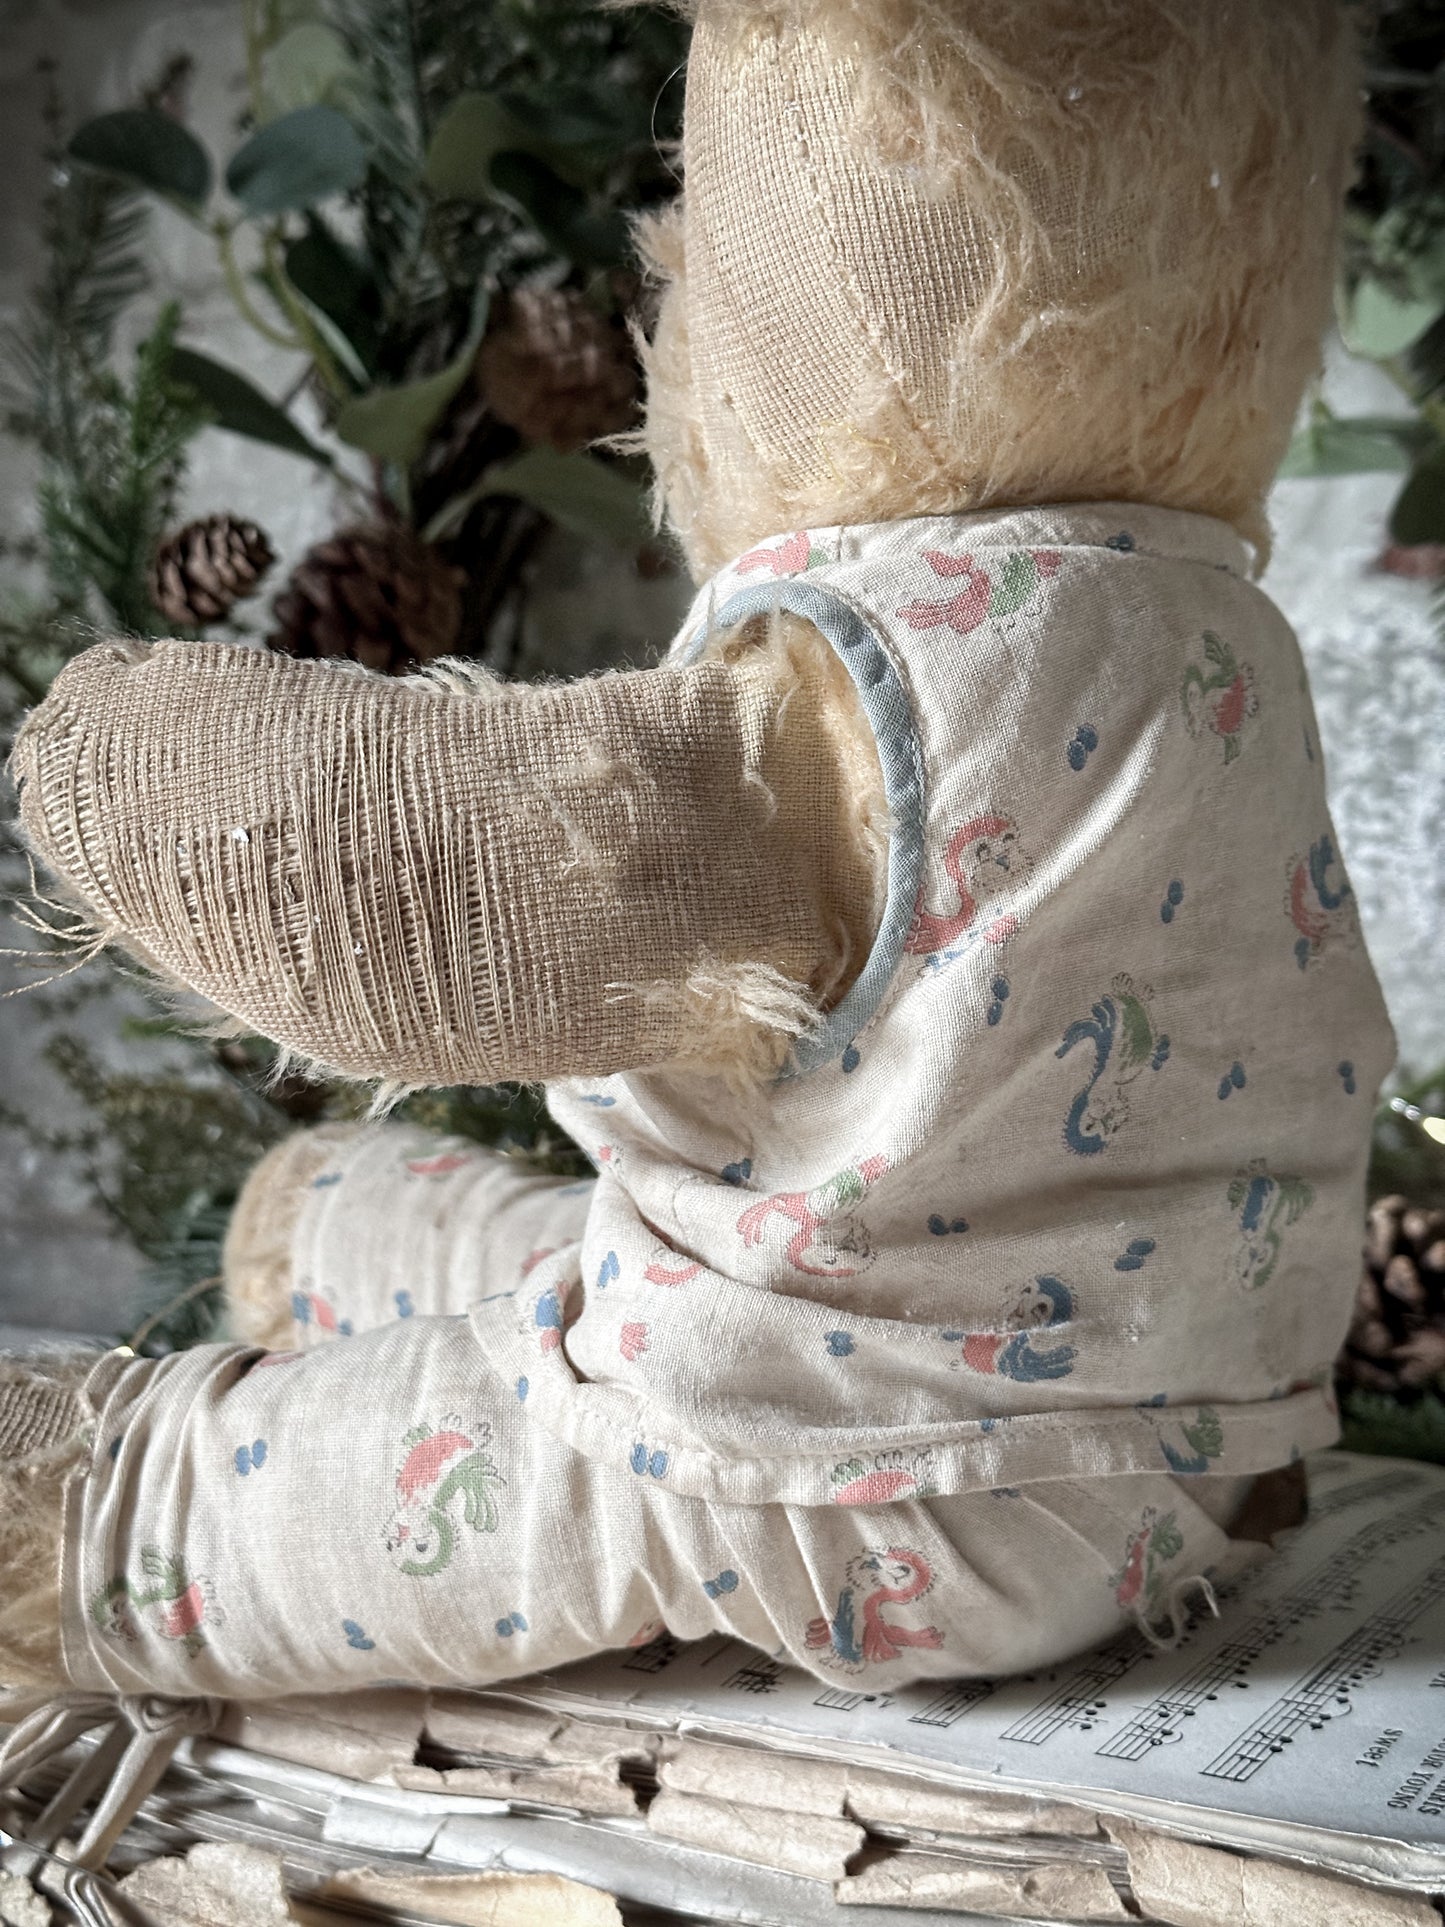 A lovely antique teddy made in original cotton pyjamas